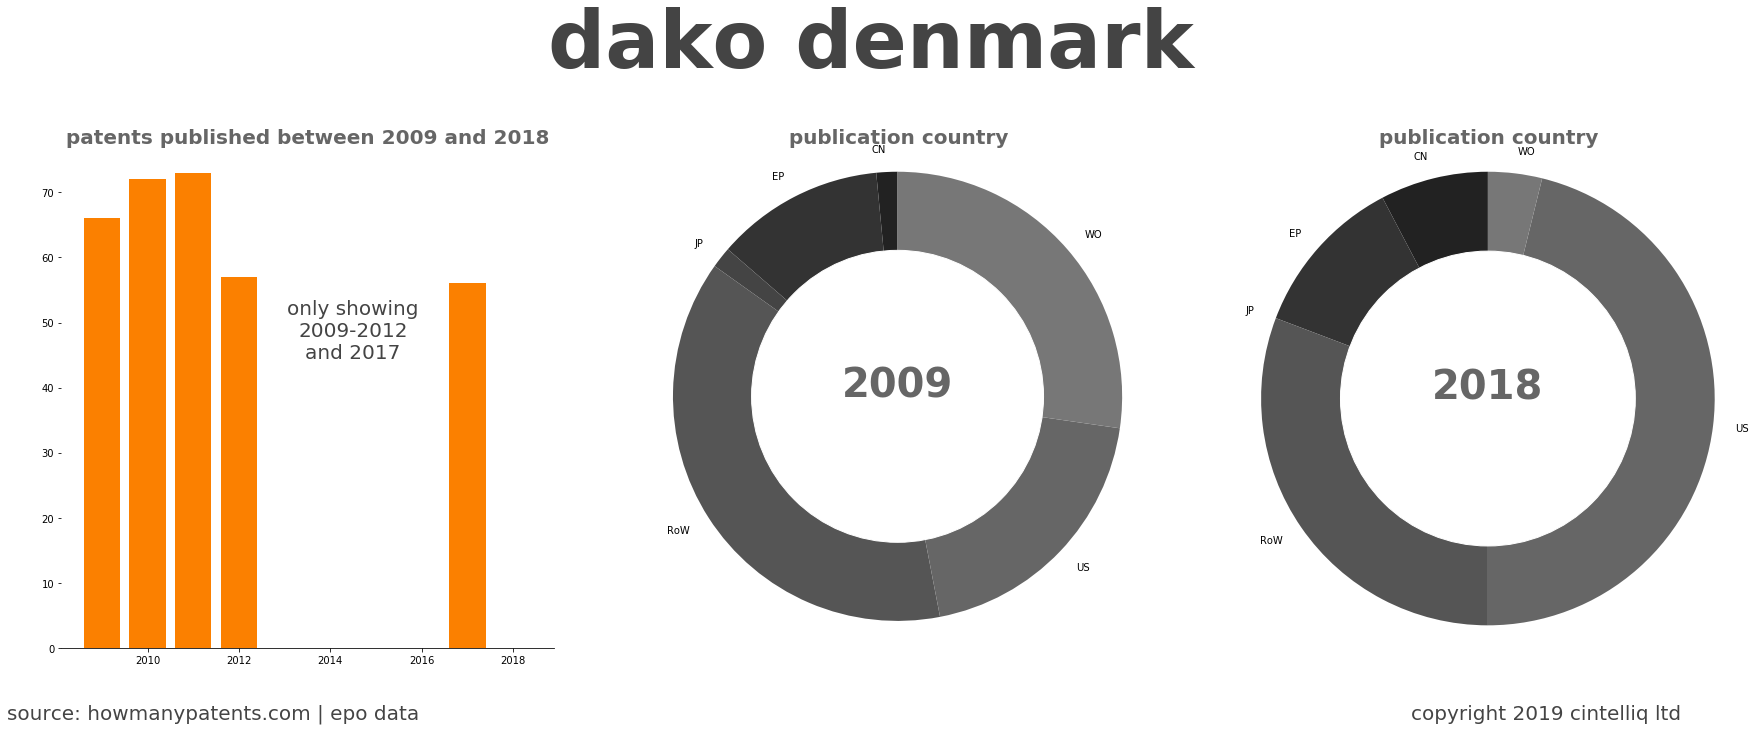 summary of patents for Dako Denmark